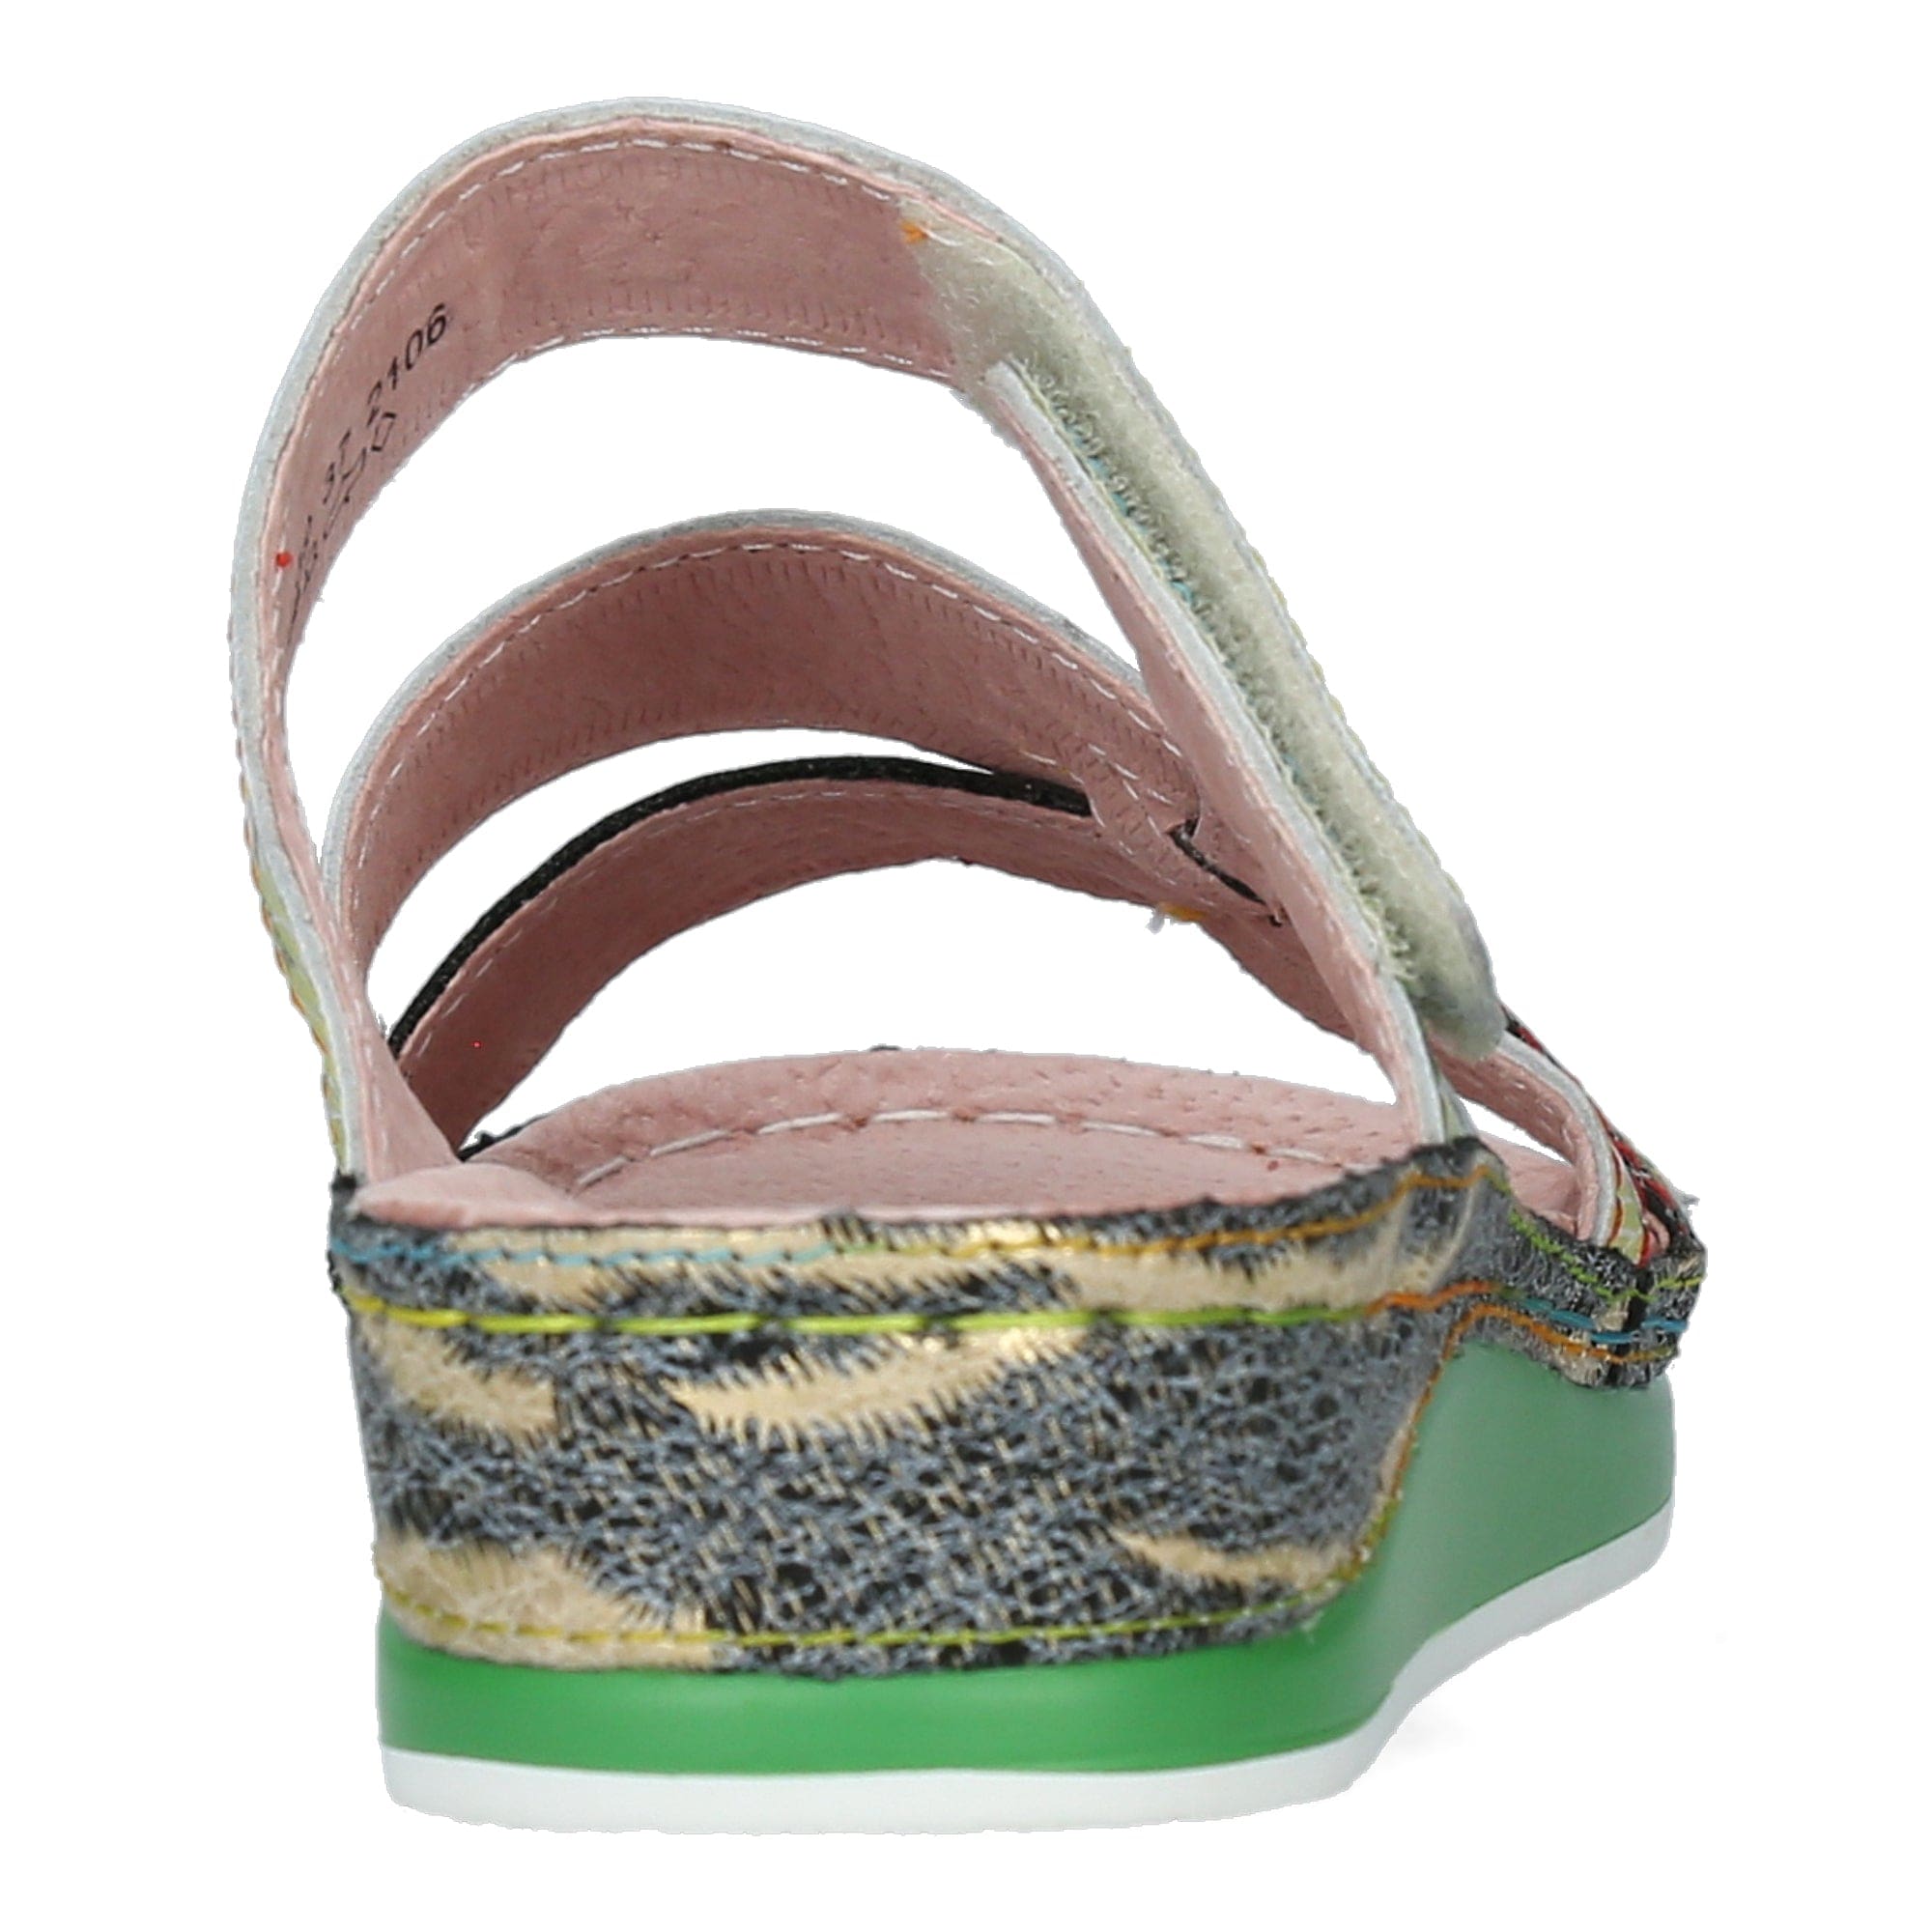 Chaussures BRCUELO 0521 - Mule